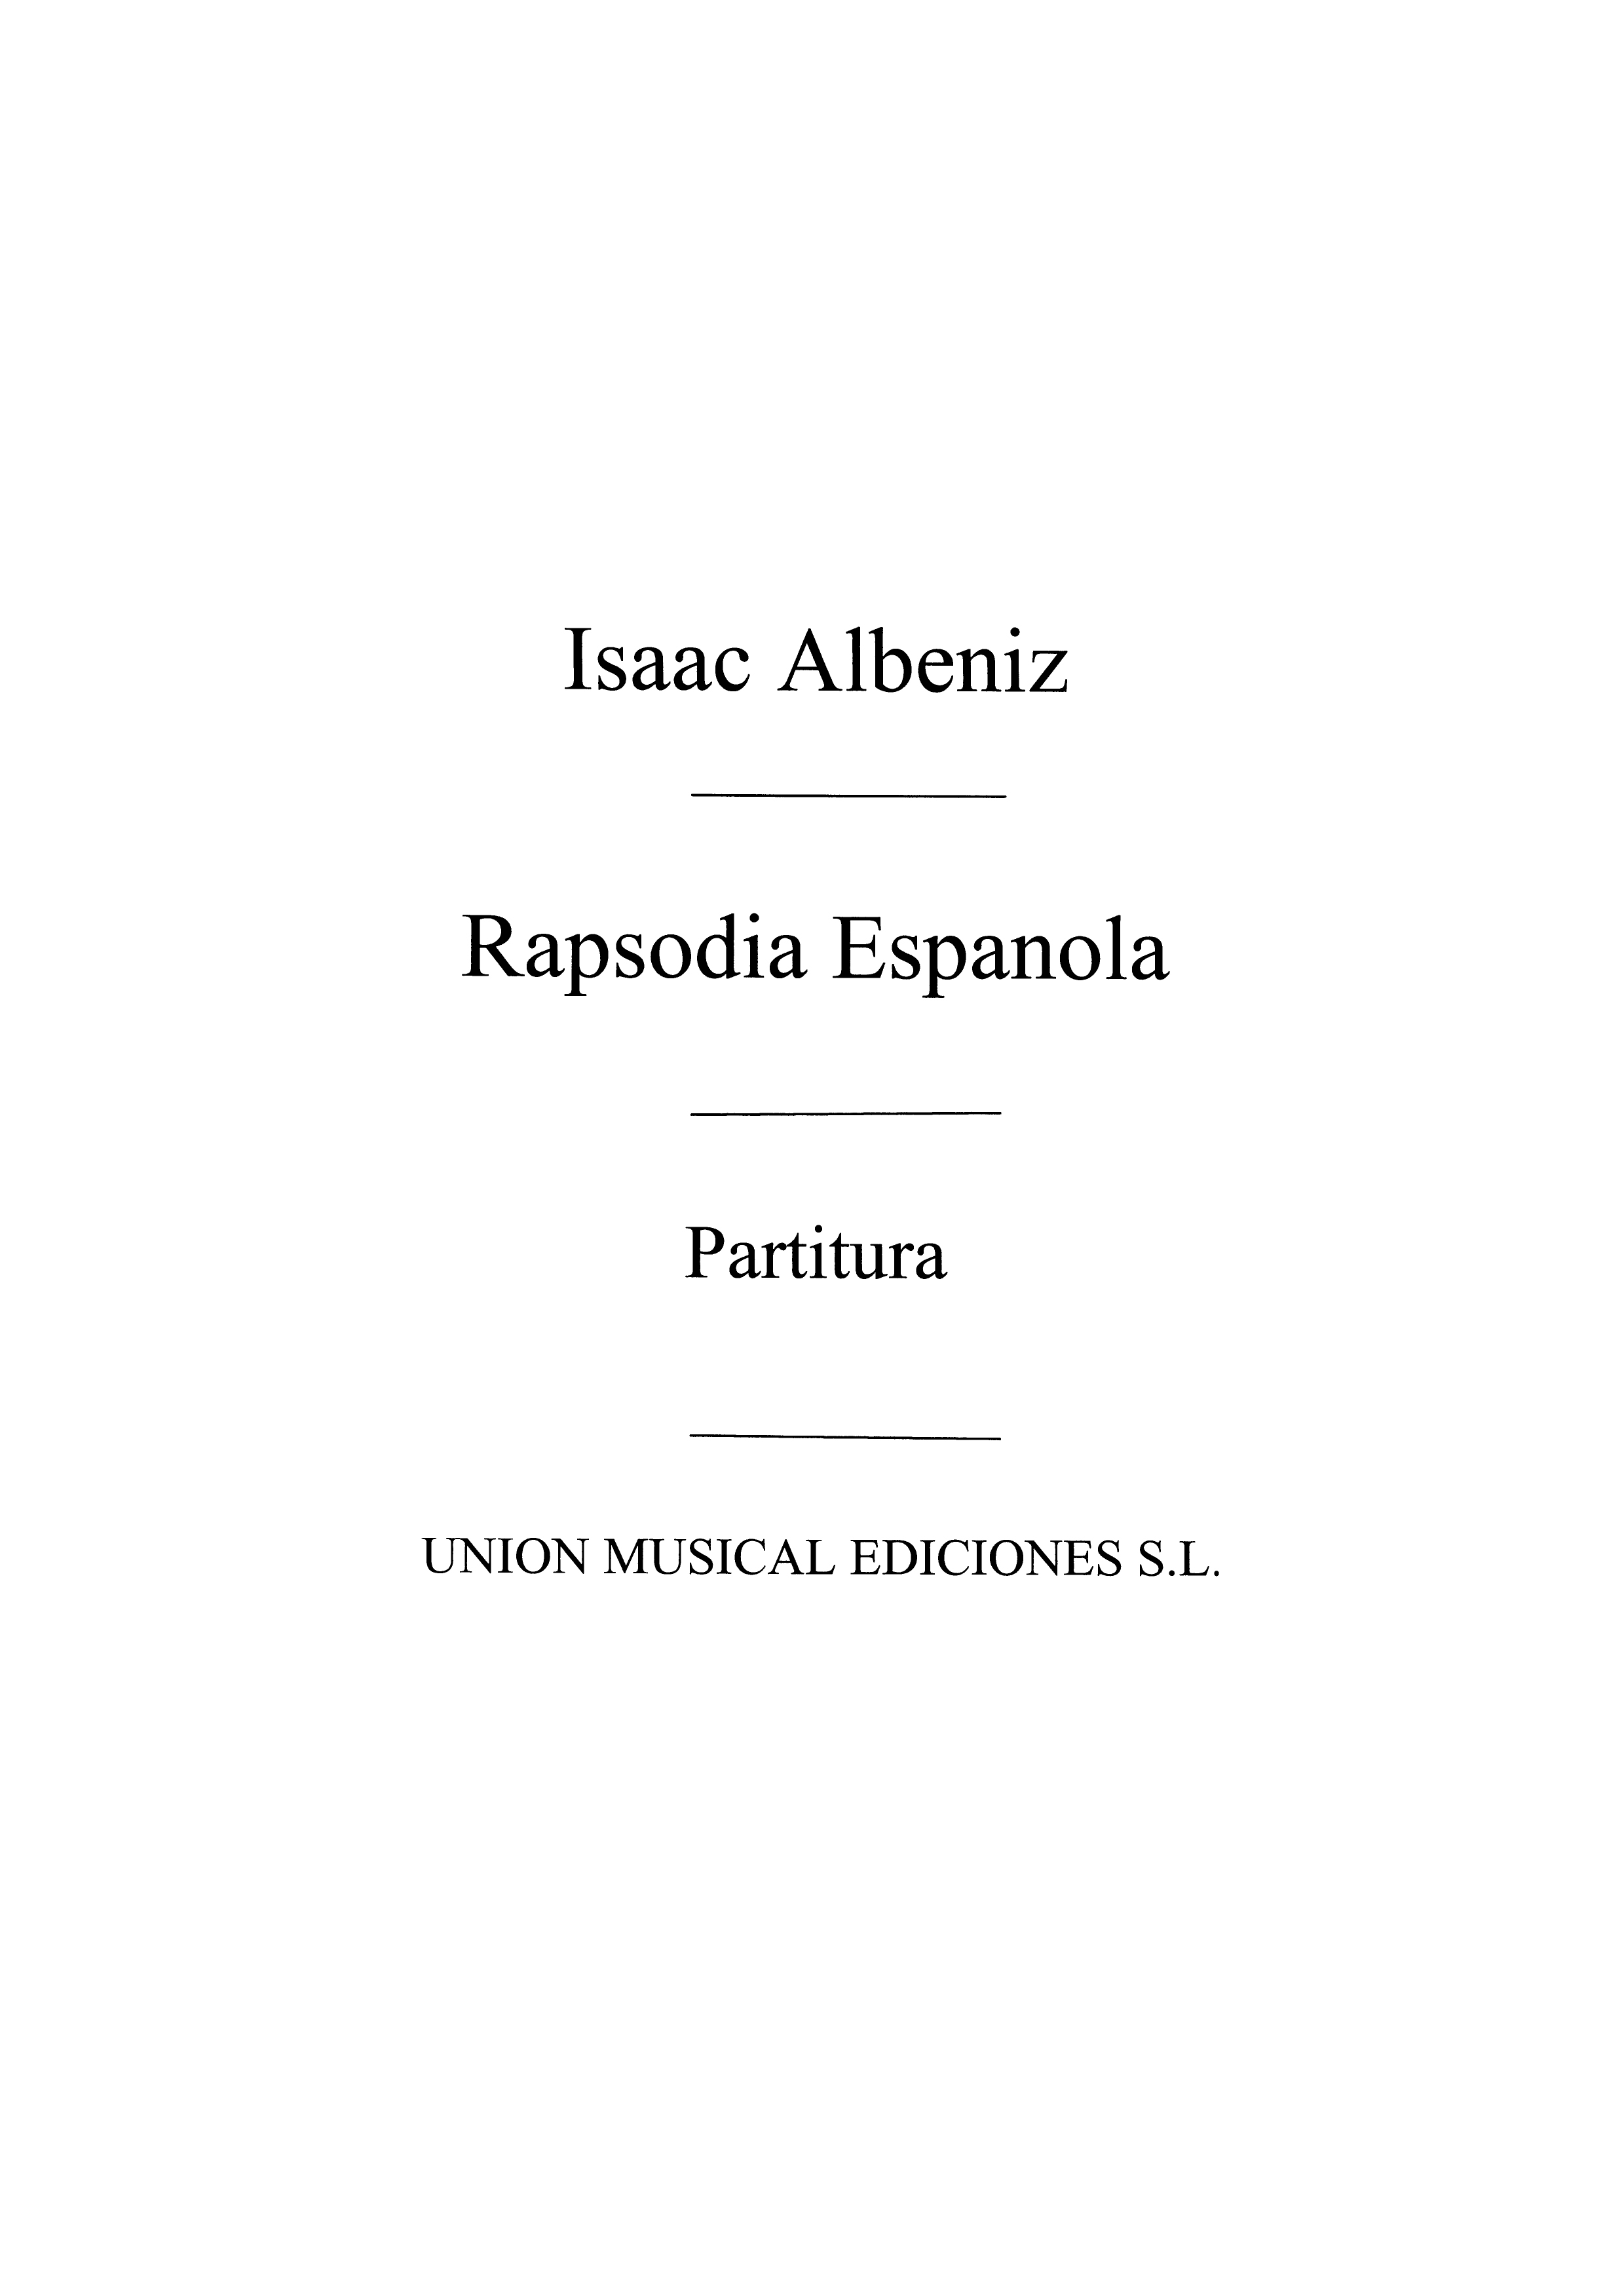 Albeniz: Rapsodia Espanola (Halffter,C) for 2 Pianos